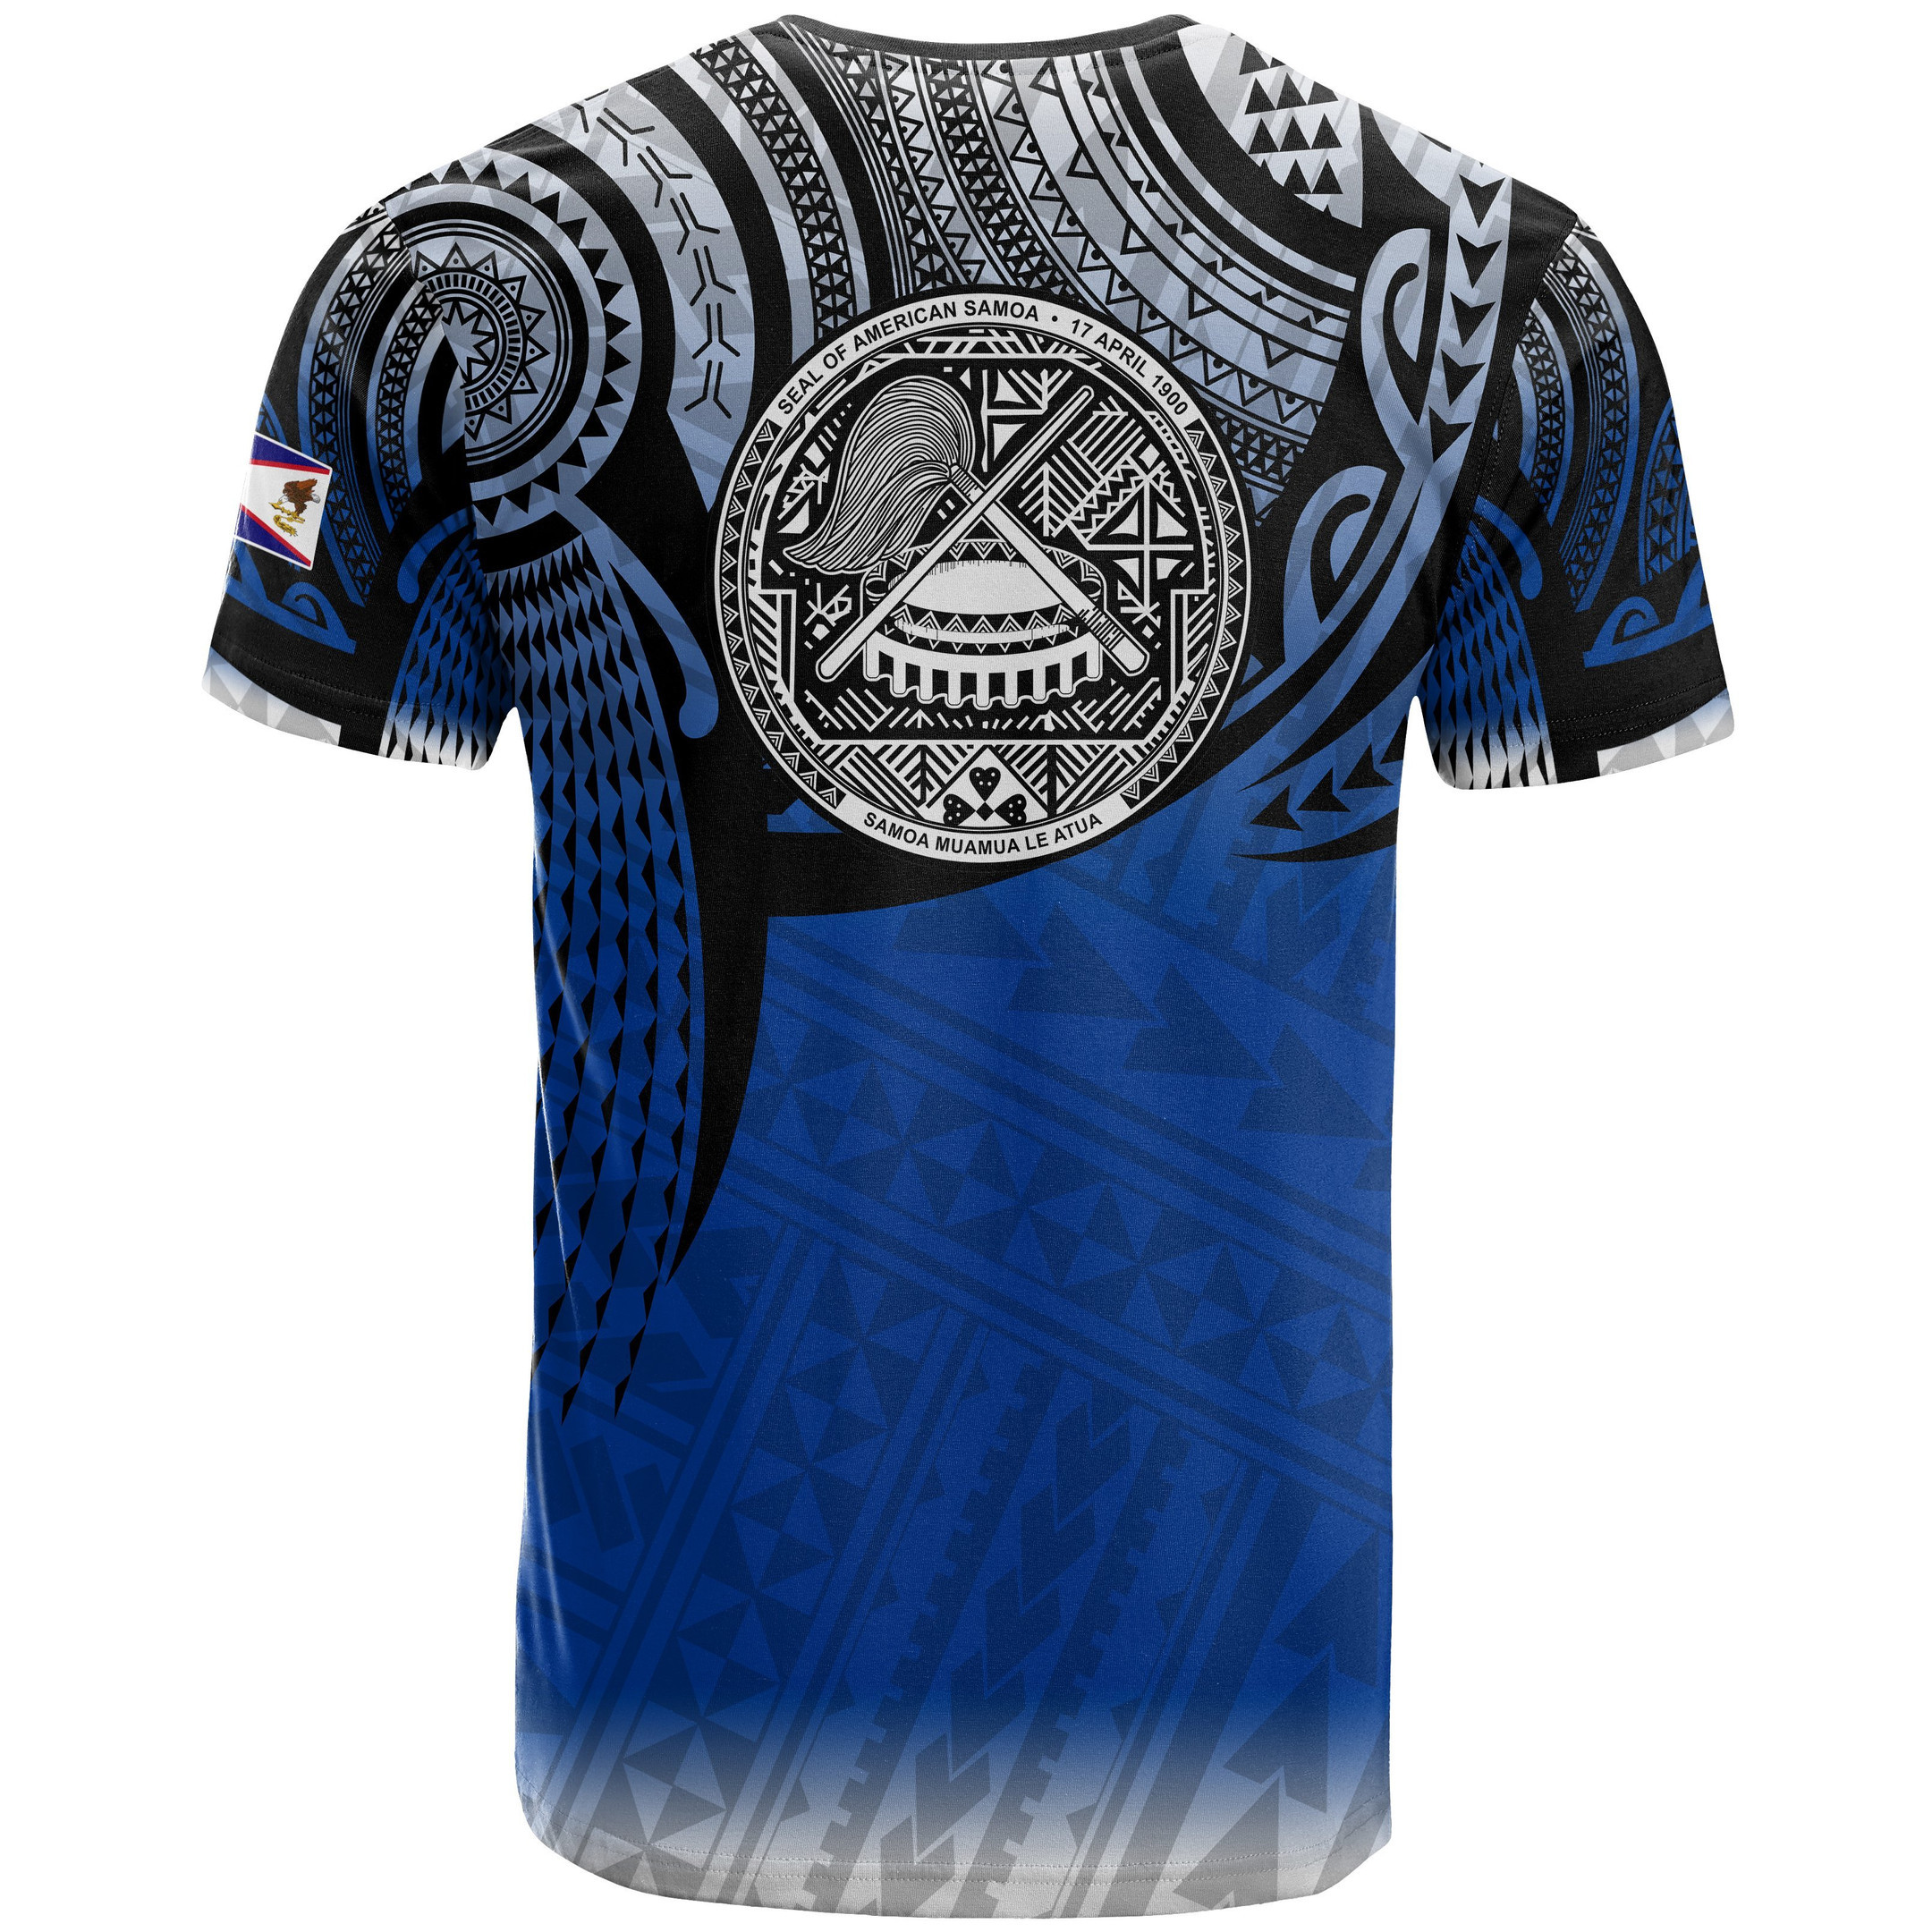 American Samoa Polynesian T-Shirt - Tattoo Pattern - BN12